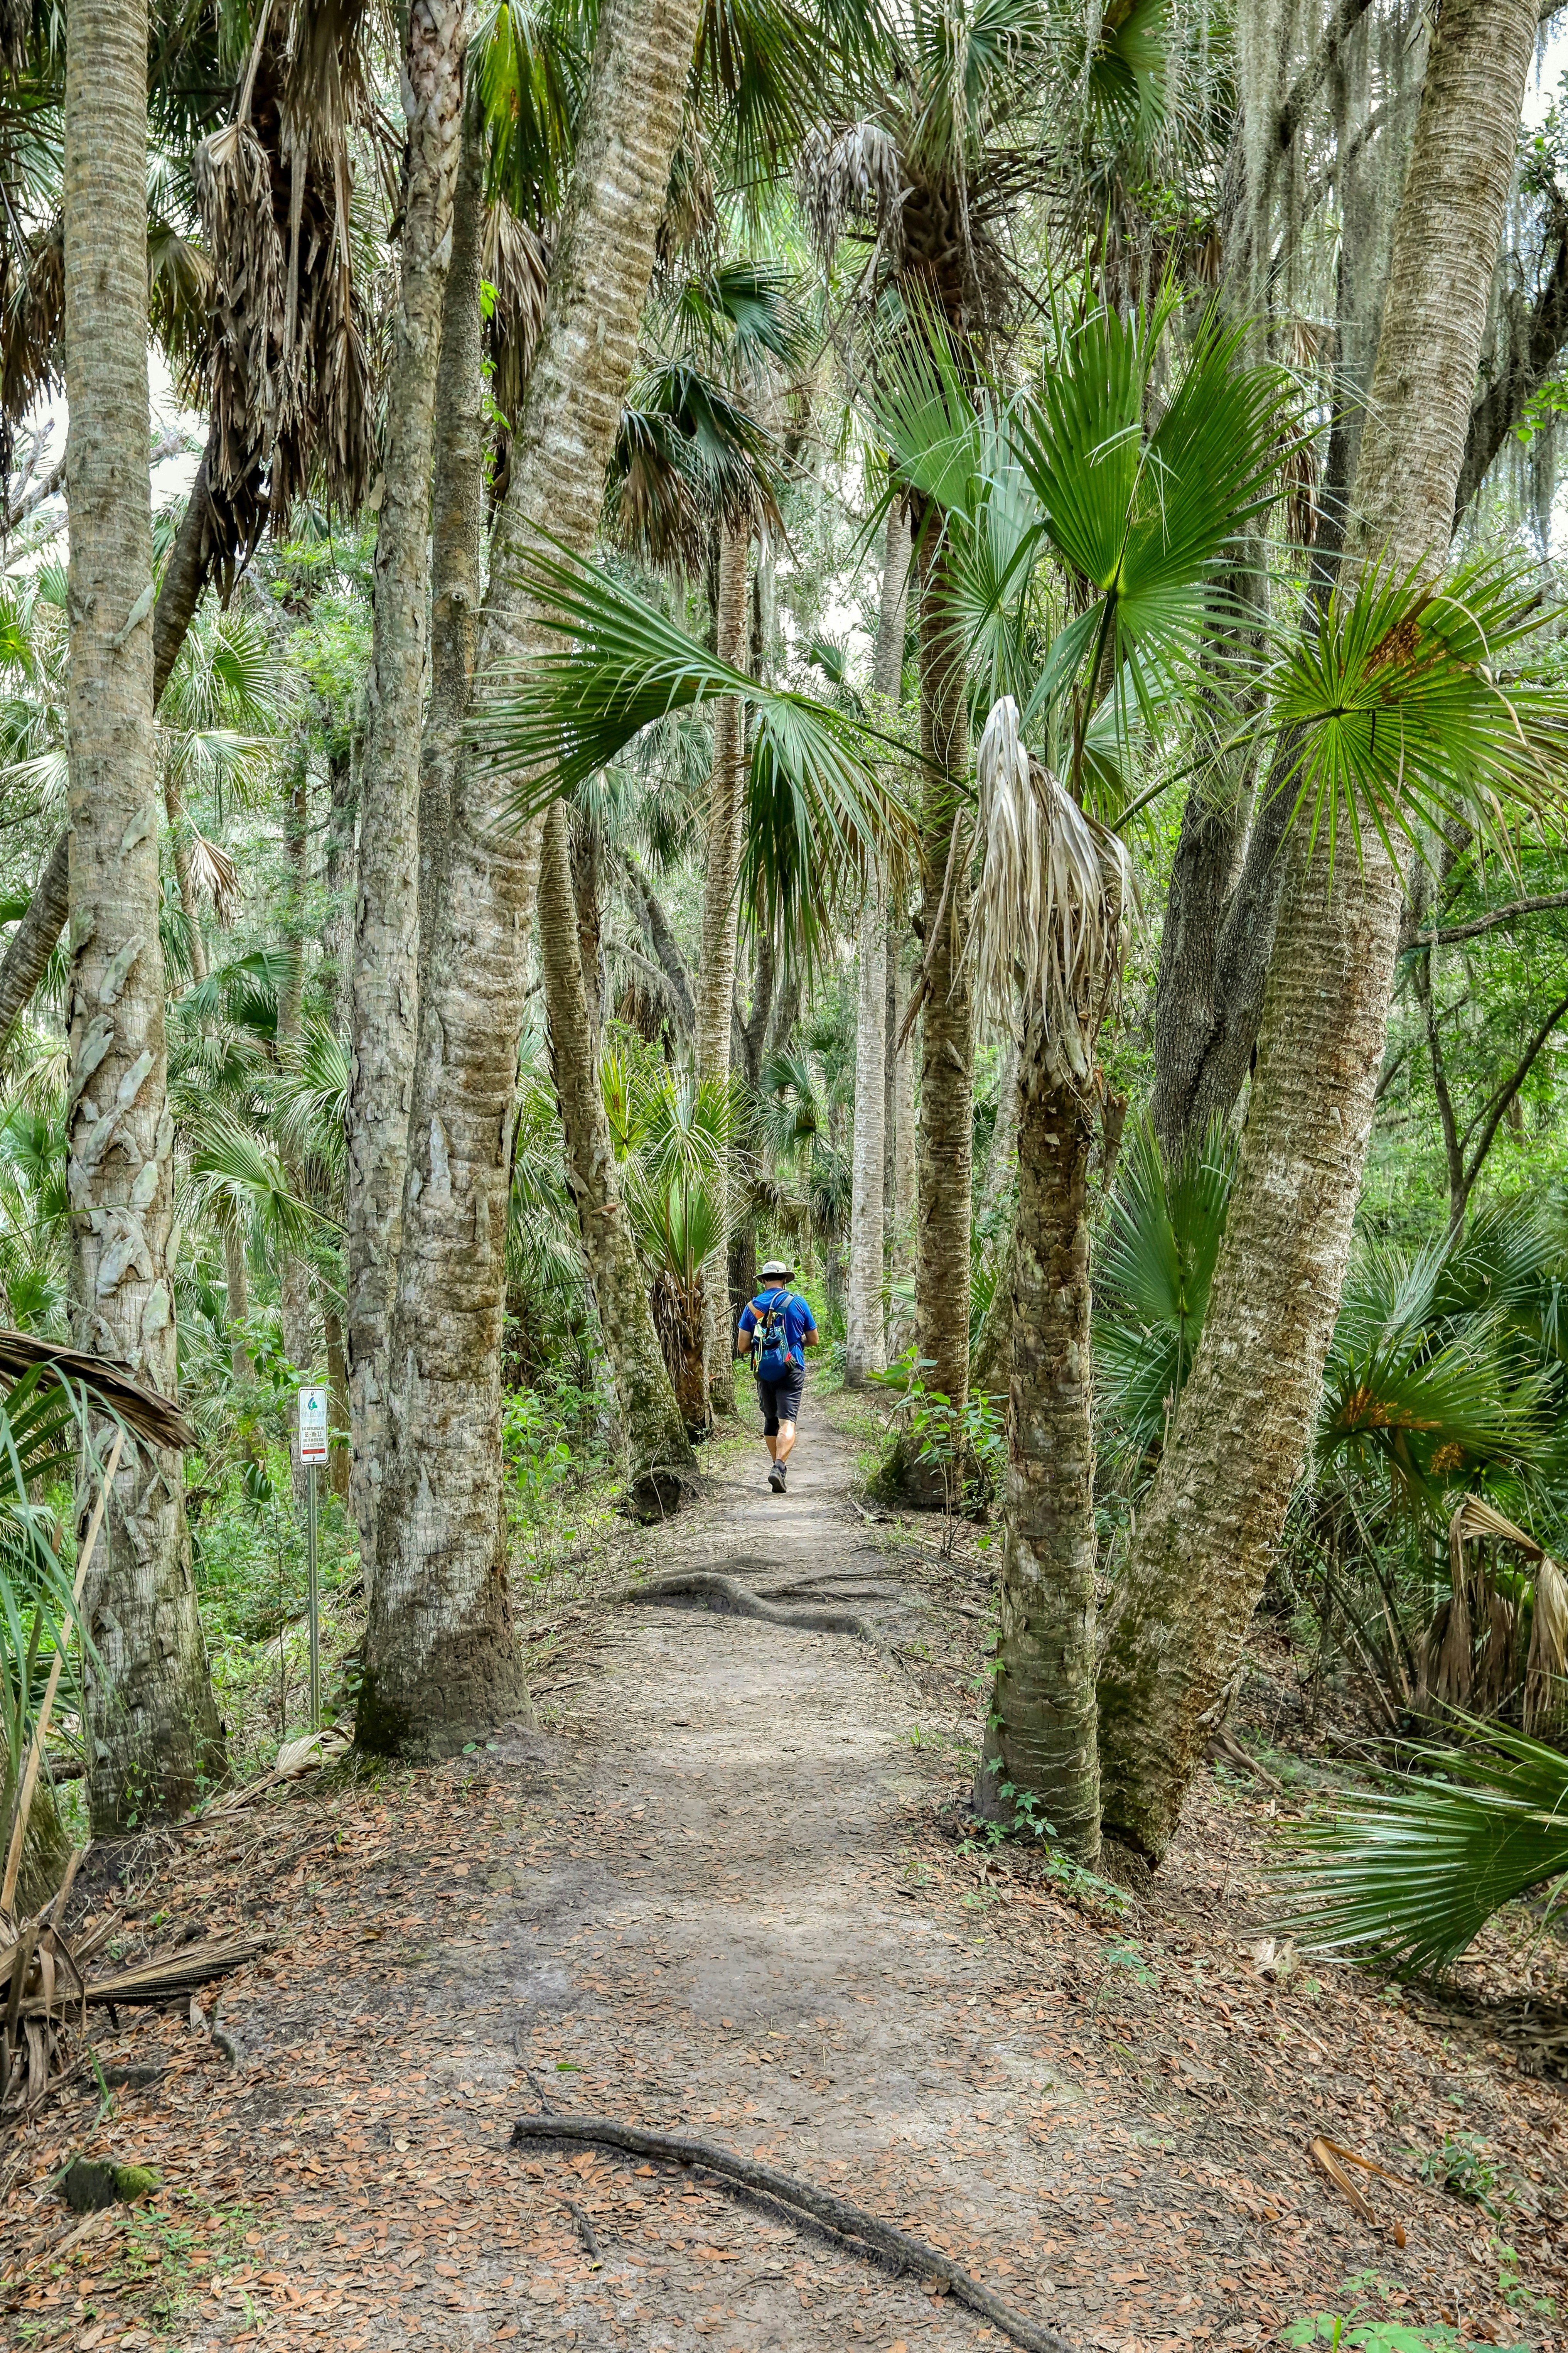 man in blue shirt walking on pathway between palm trees during daytime